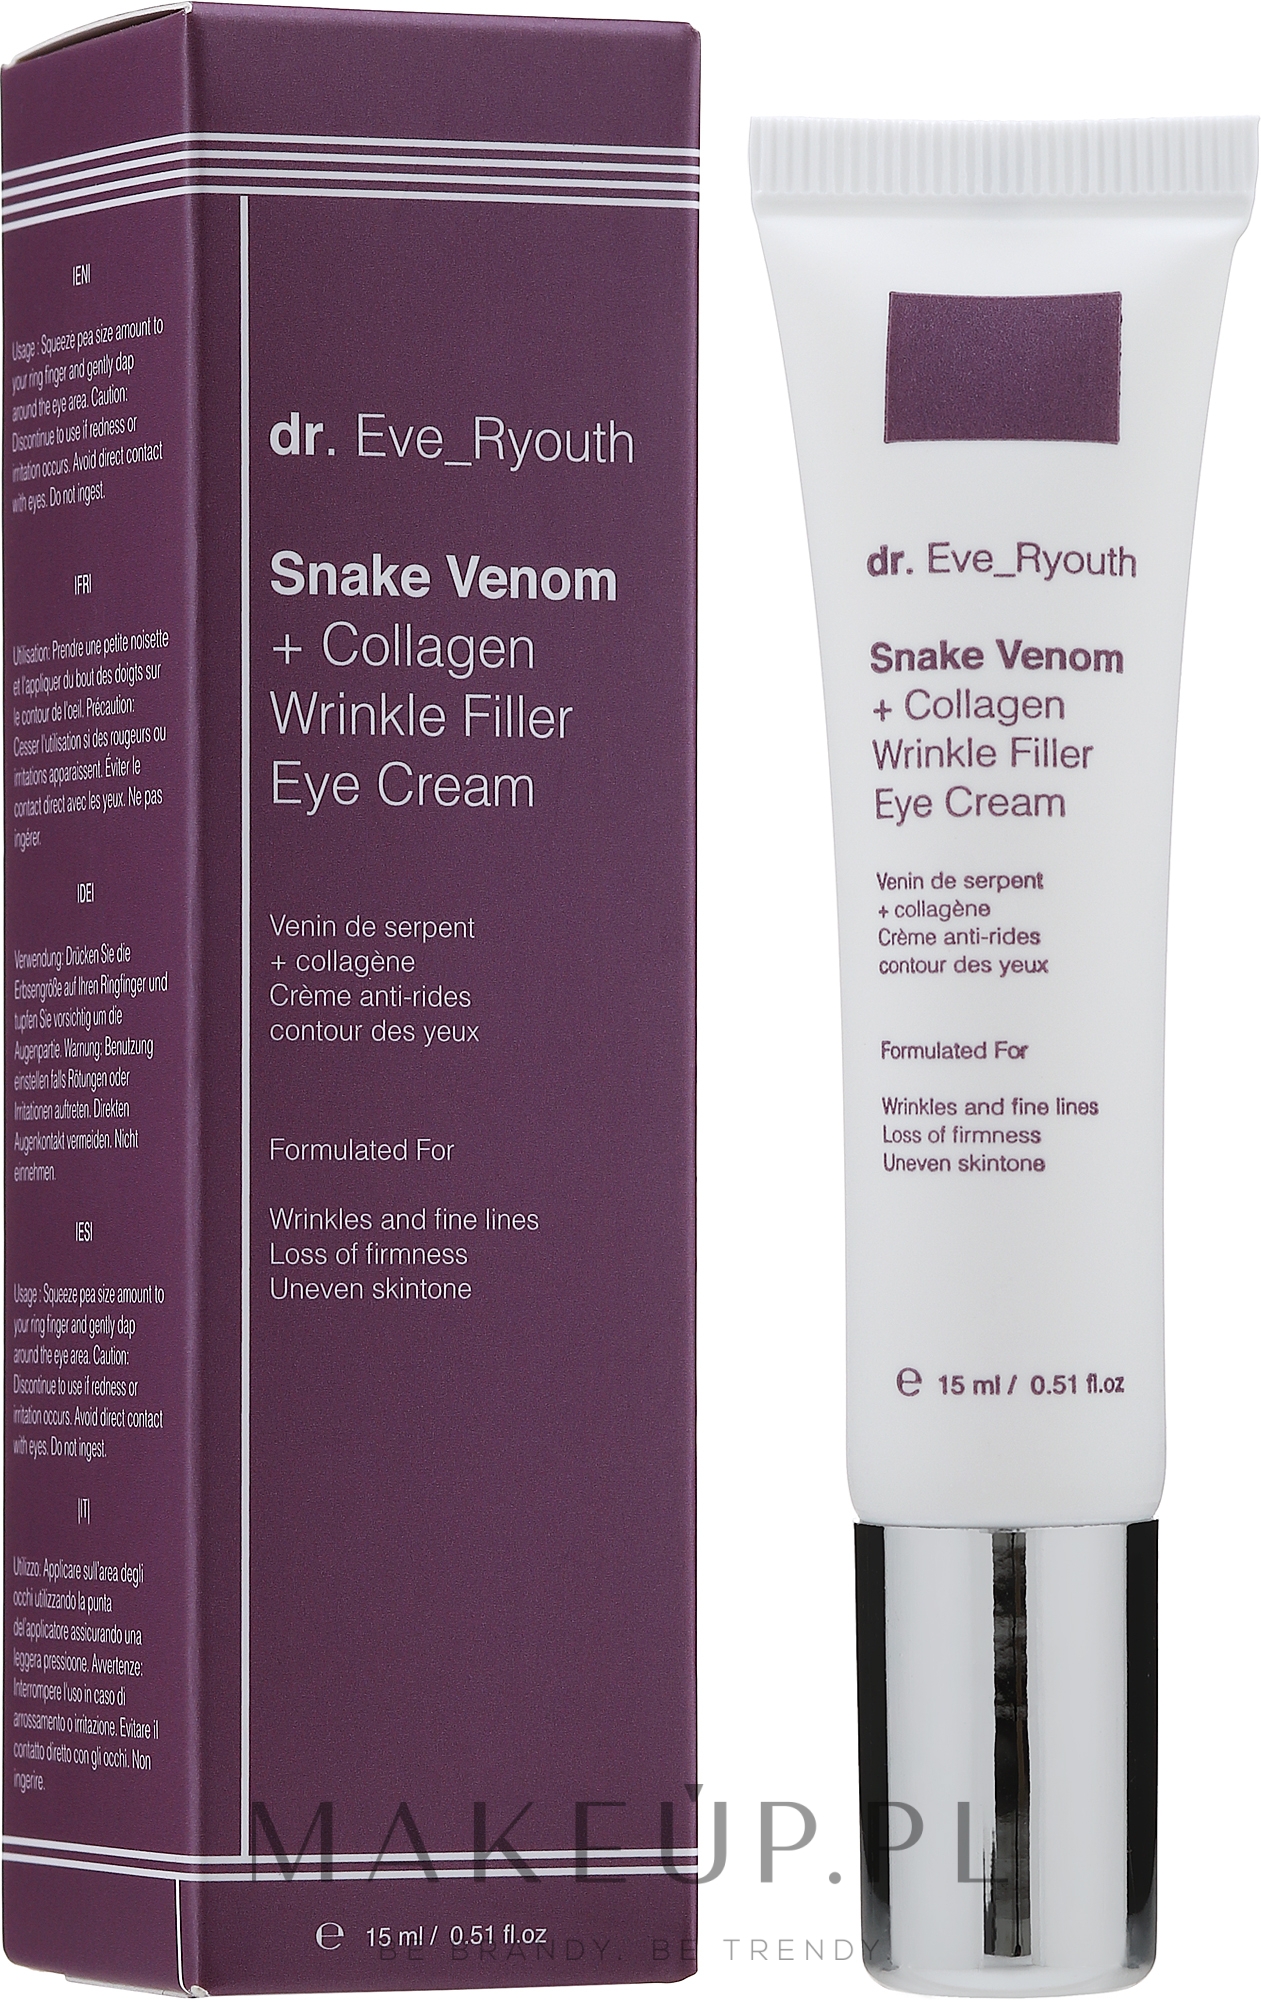 Krem na zasinienia i worki pod oczami - Dr. Eve_Ryouth Snake Venom + Collagen Wrinkle Filler Eye Cream — Zdjęcie 15 ml